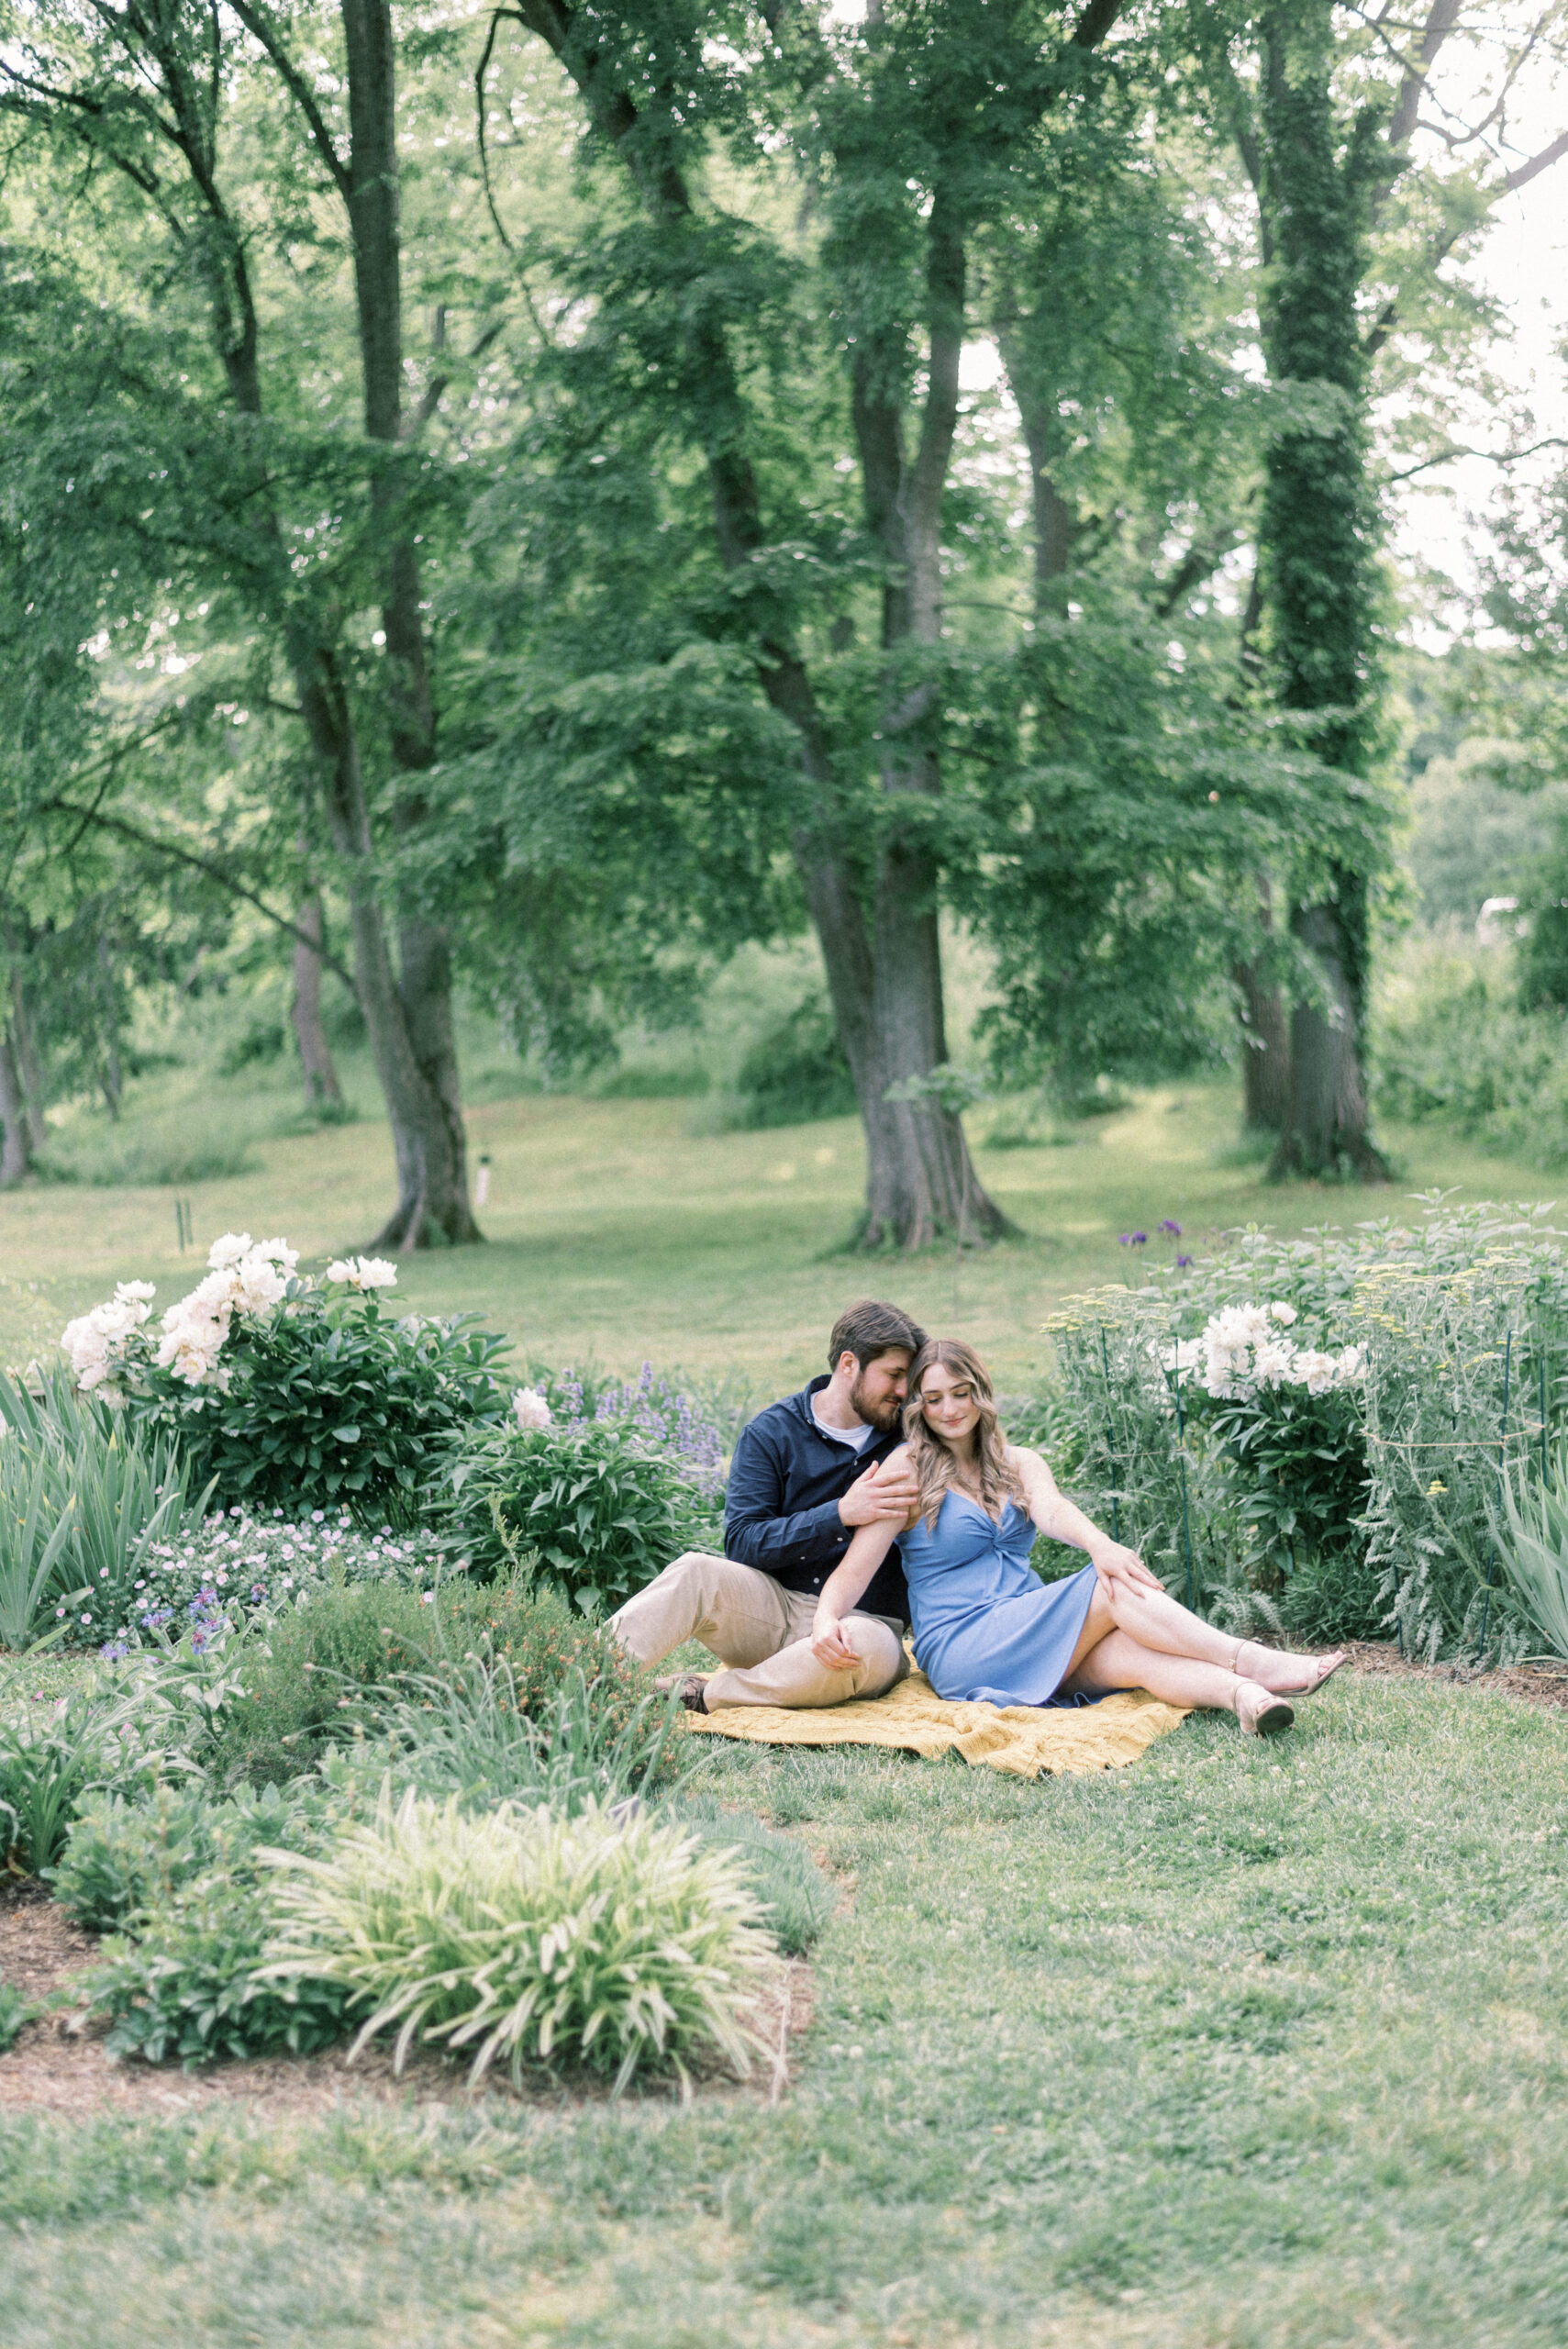 Maryland wedding photographer captures couple sitting on picnic blanket during engagement portraits